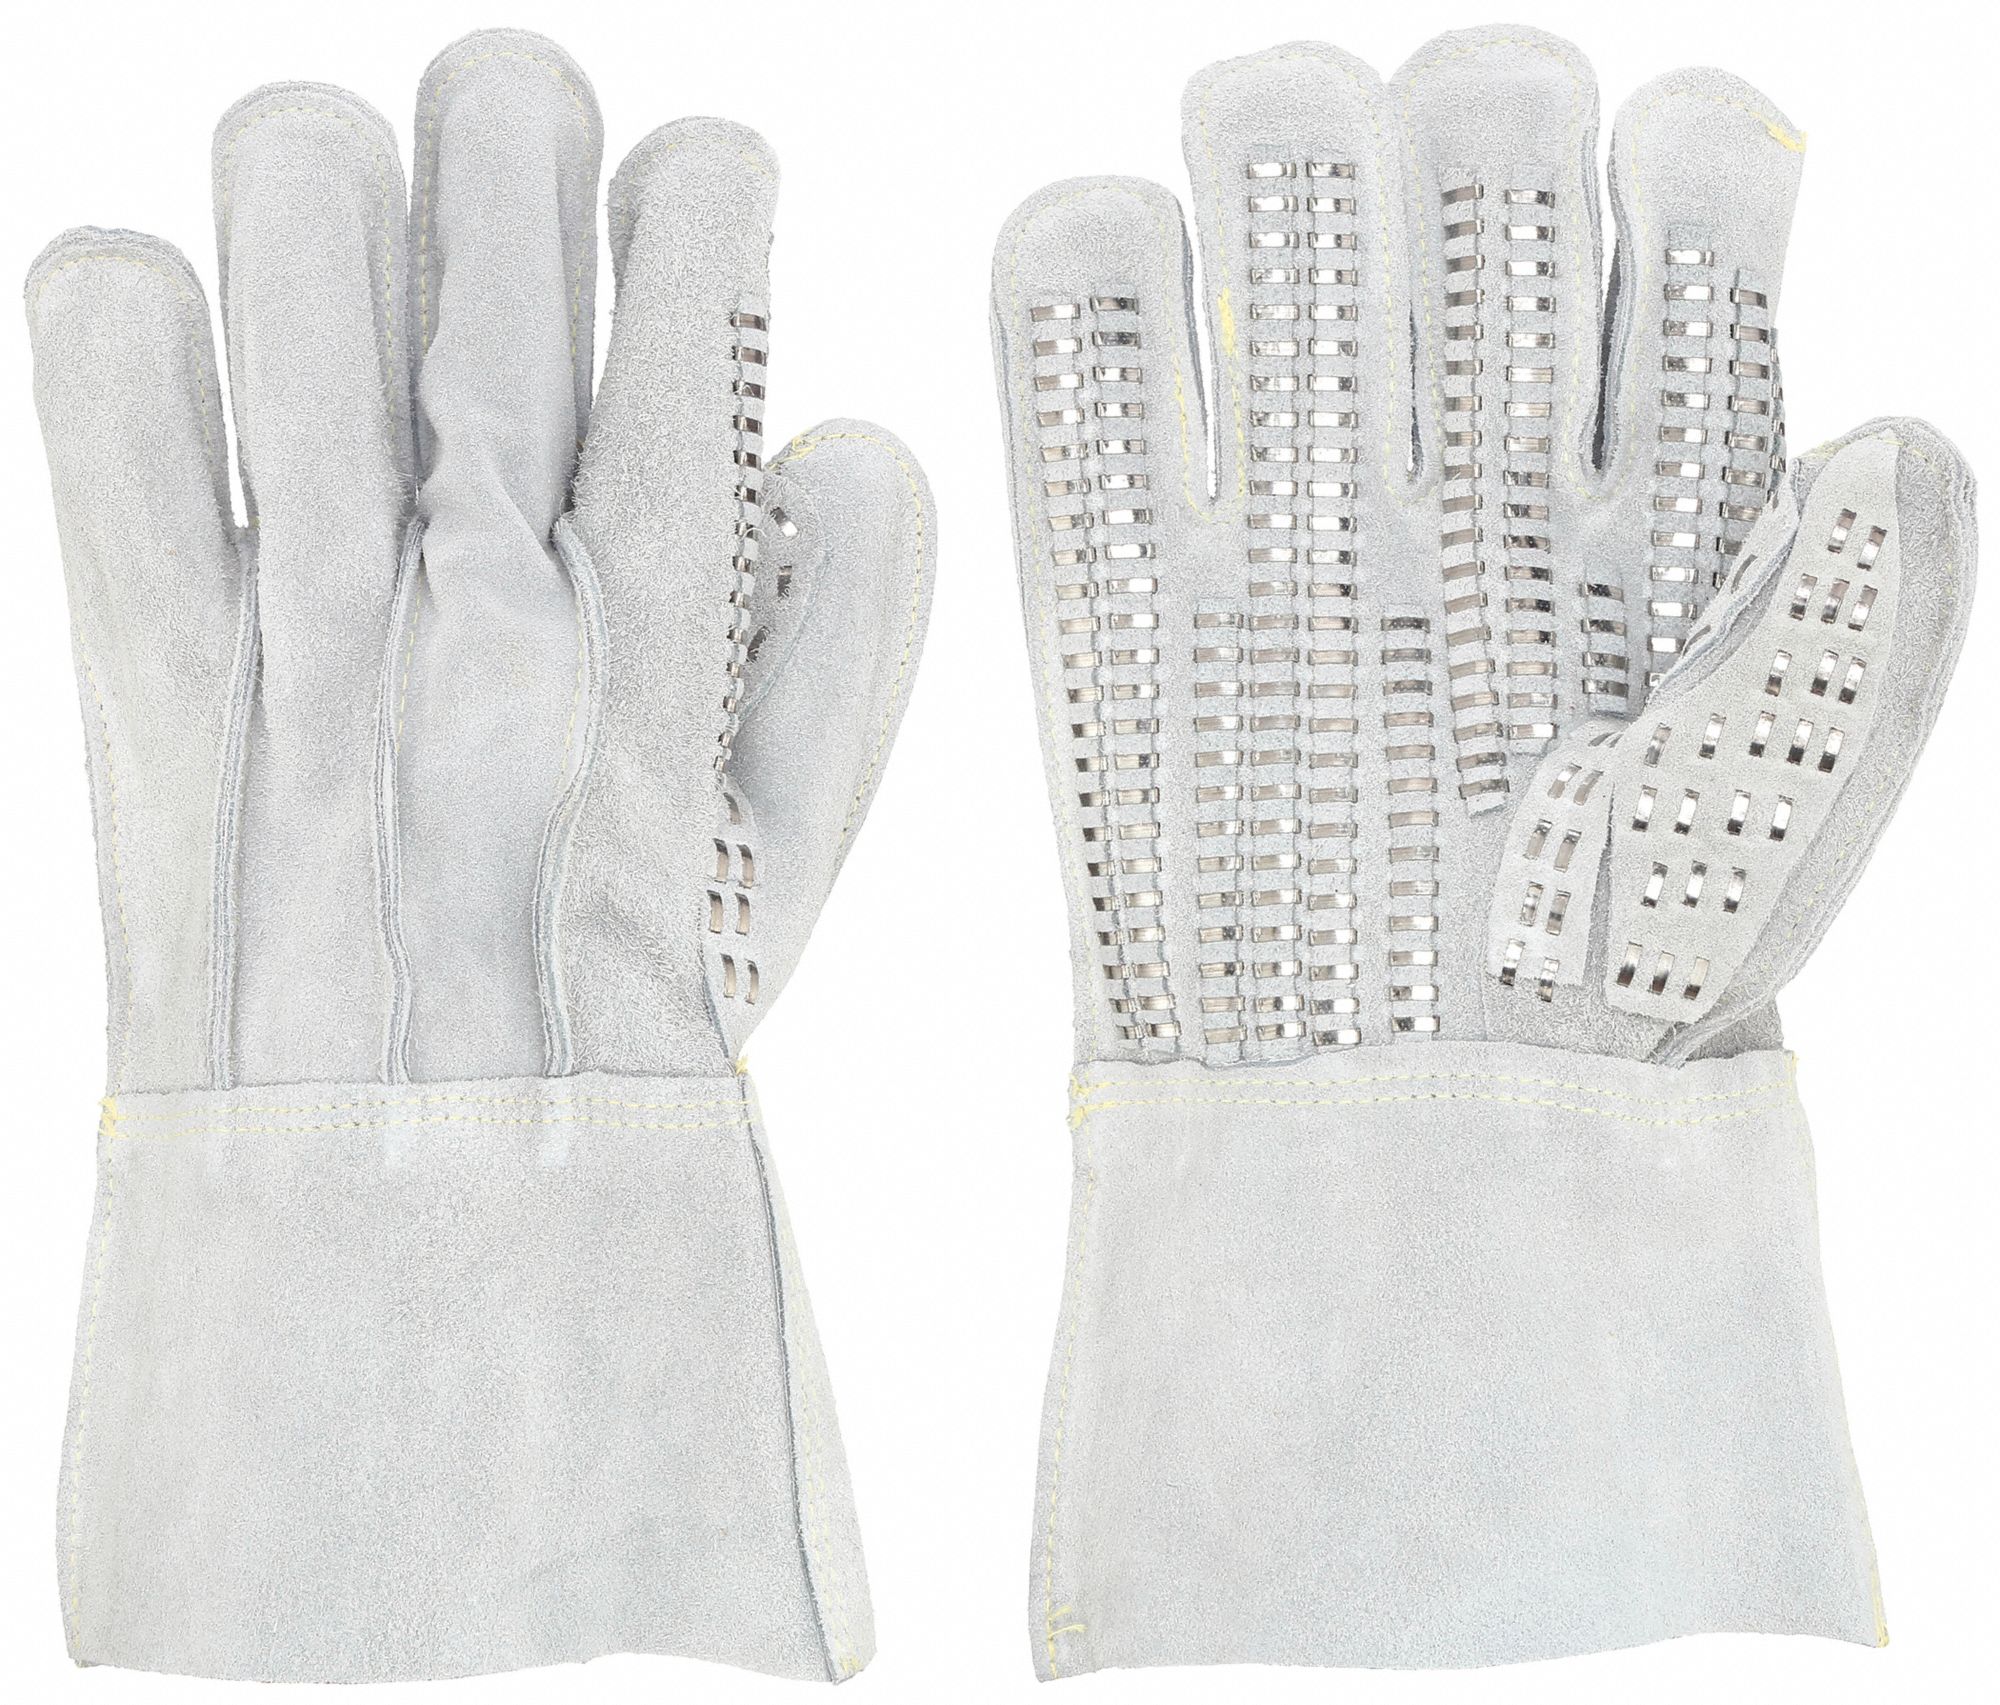 STEEL GRIP CUT-RESISTANT KNIT GLOVES, SIZE L, 1 PR - Leather Cut-Resistant  Gloves - WWG5T395